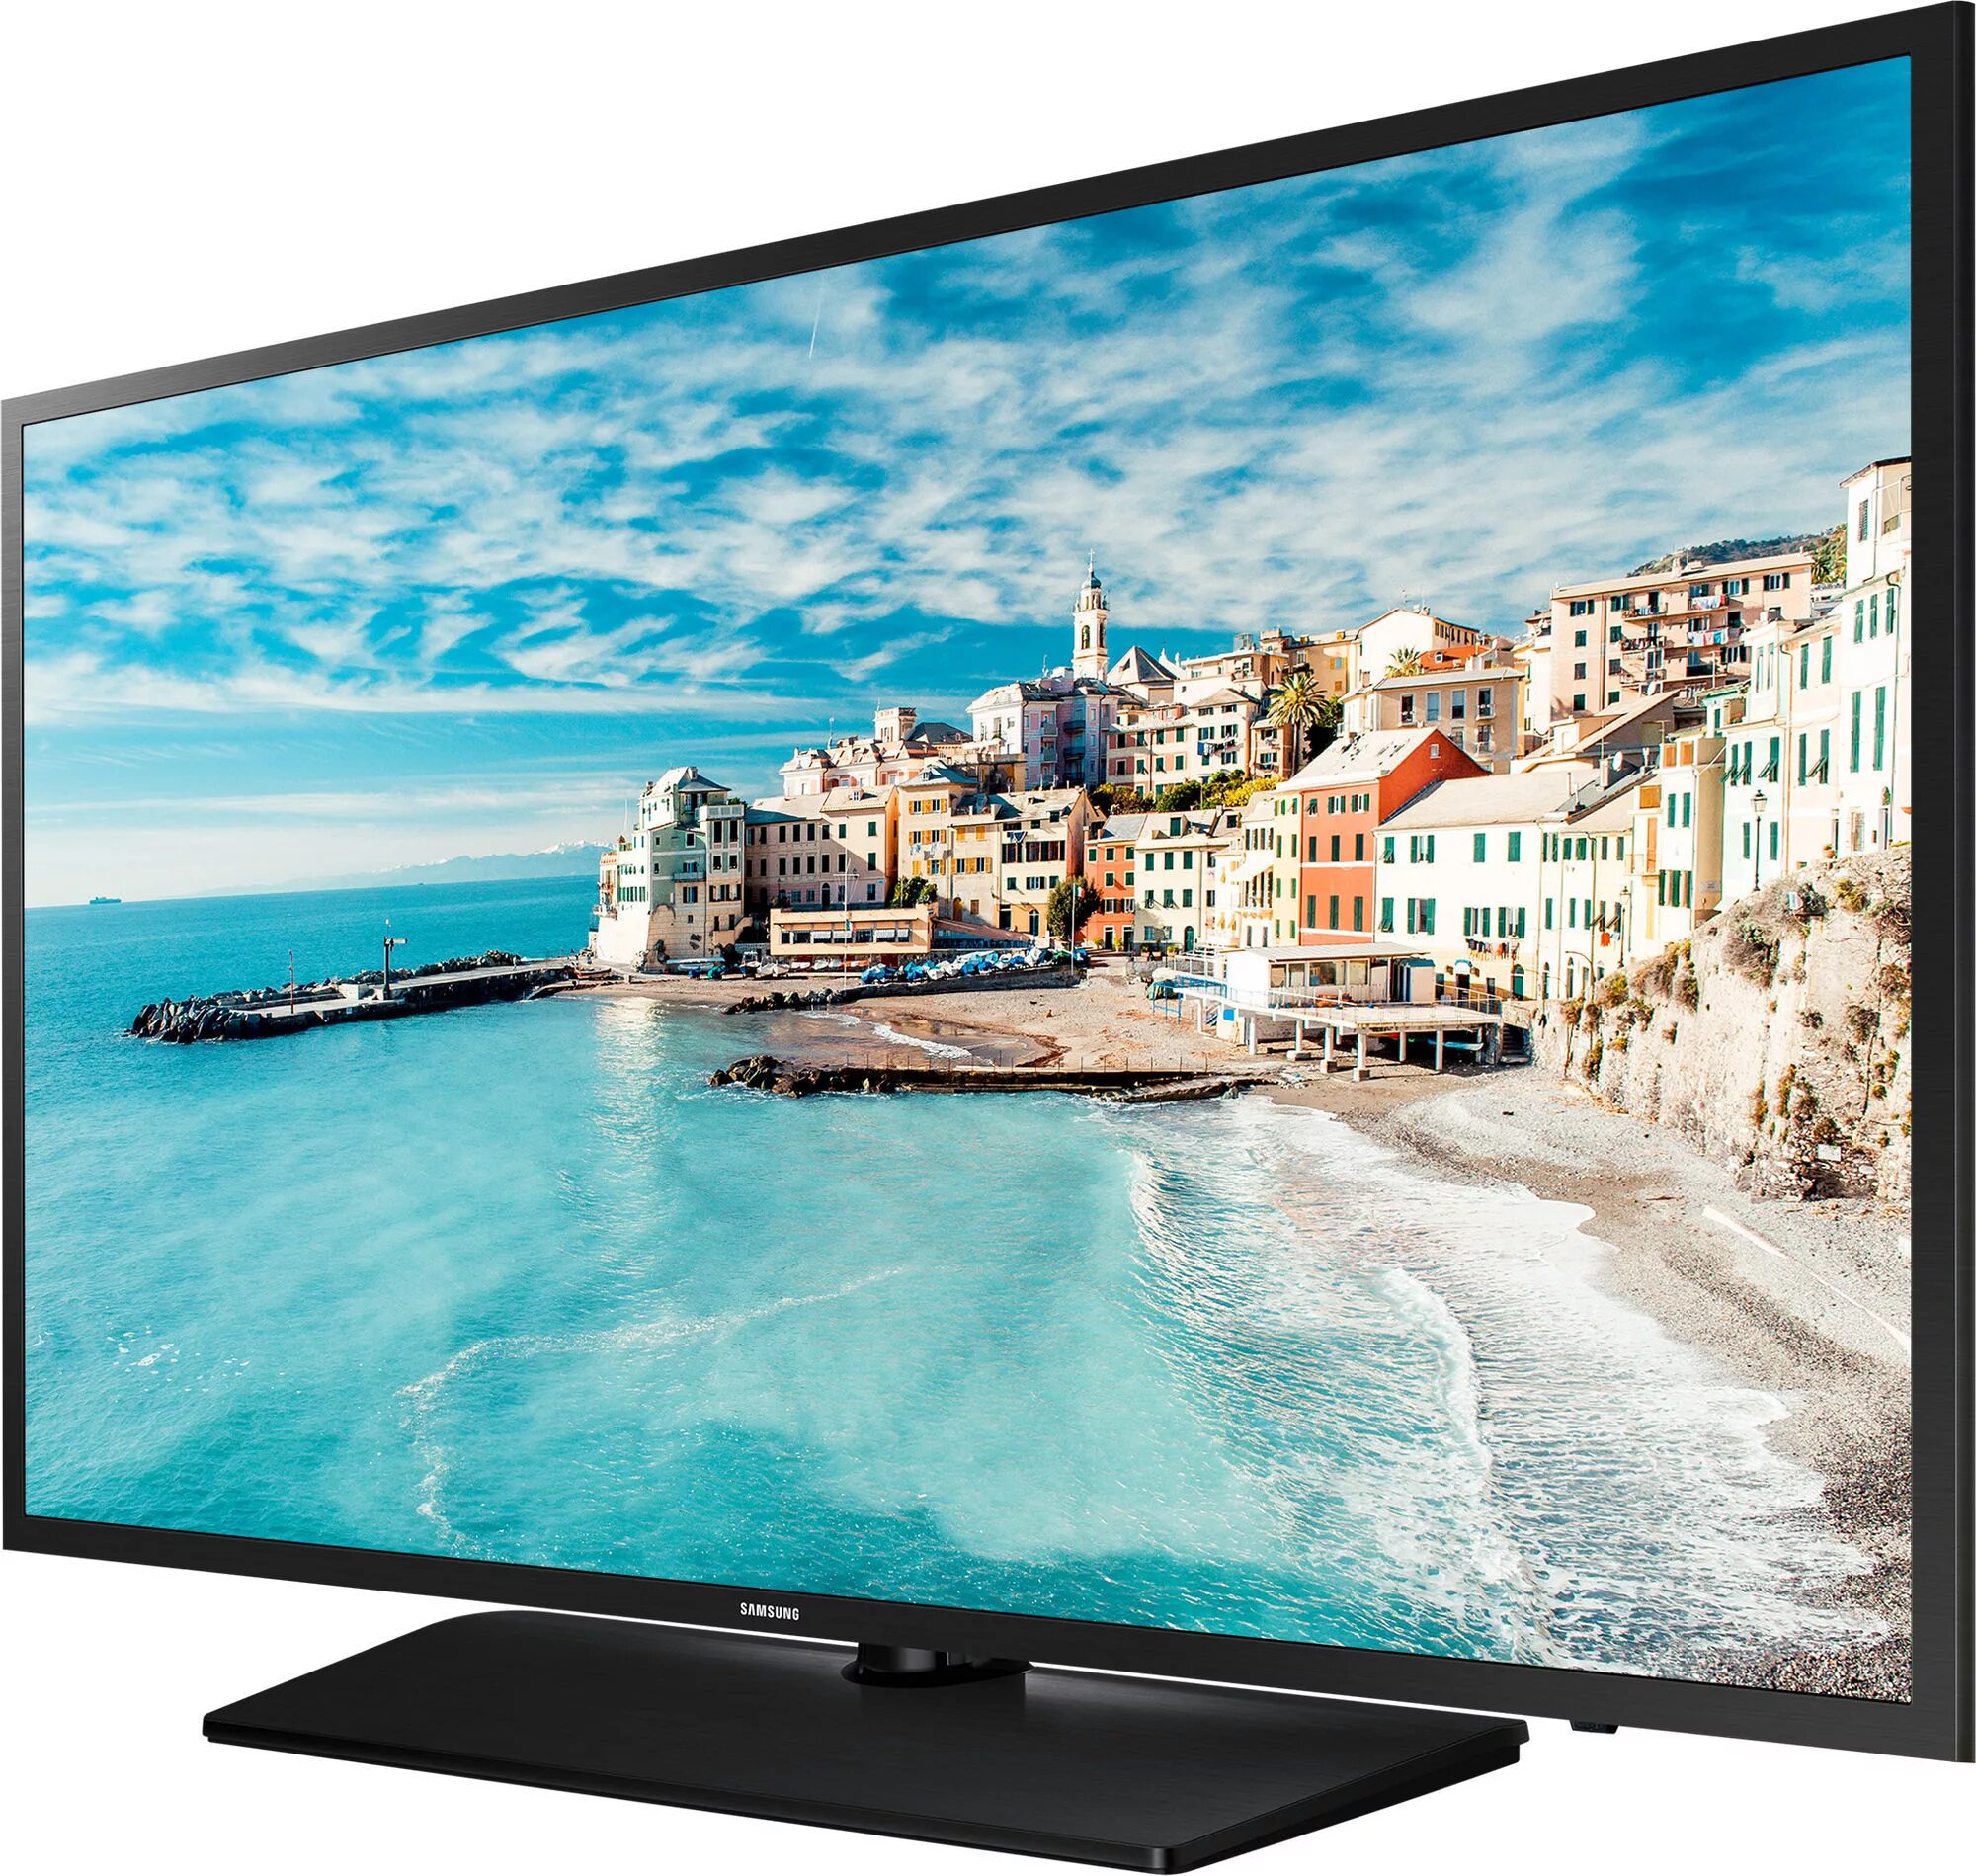 Хороший телевизор в екатеринбурге. Телевизор Samsung 32n4500. Телевизор самсунг 32n 5000. Телевизор Samsung 32n4000. Самсунг 32.d20yb.